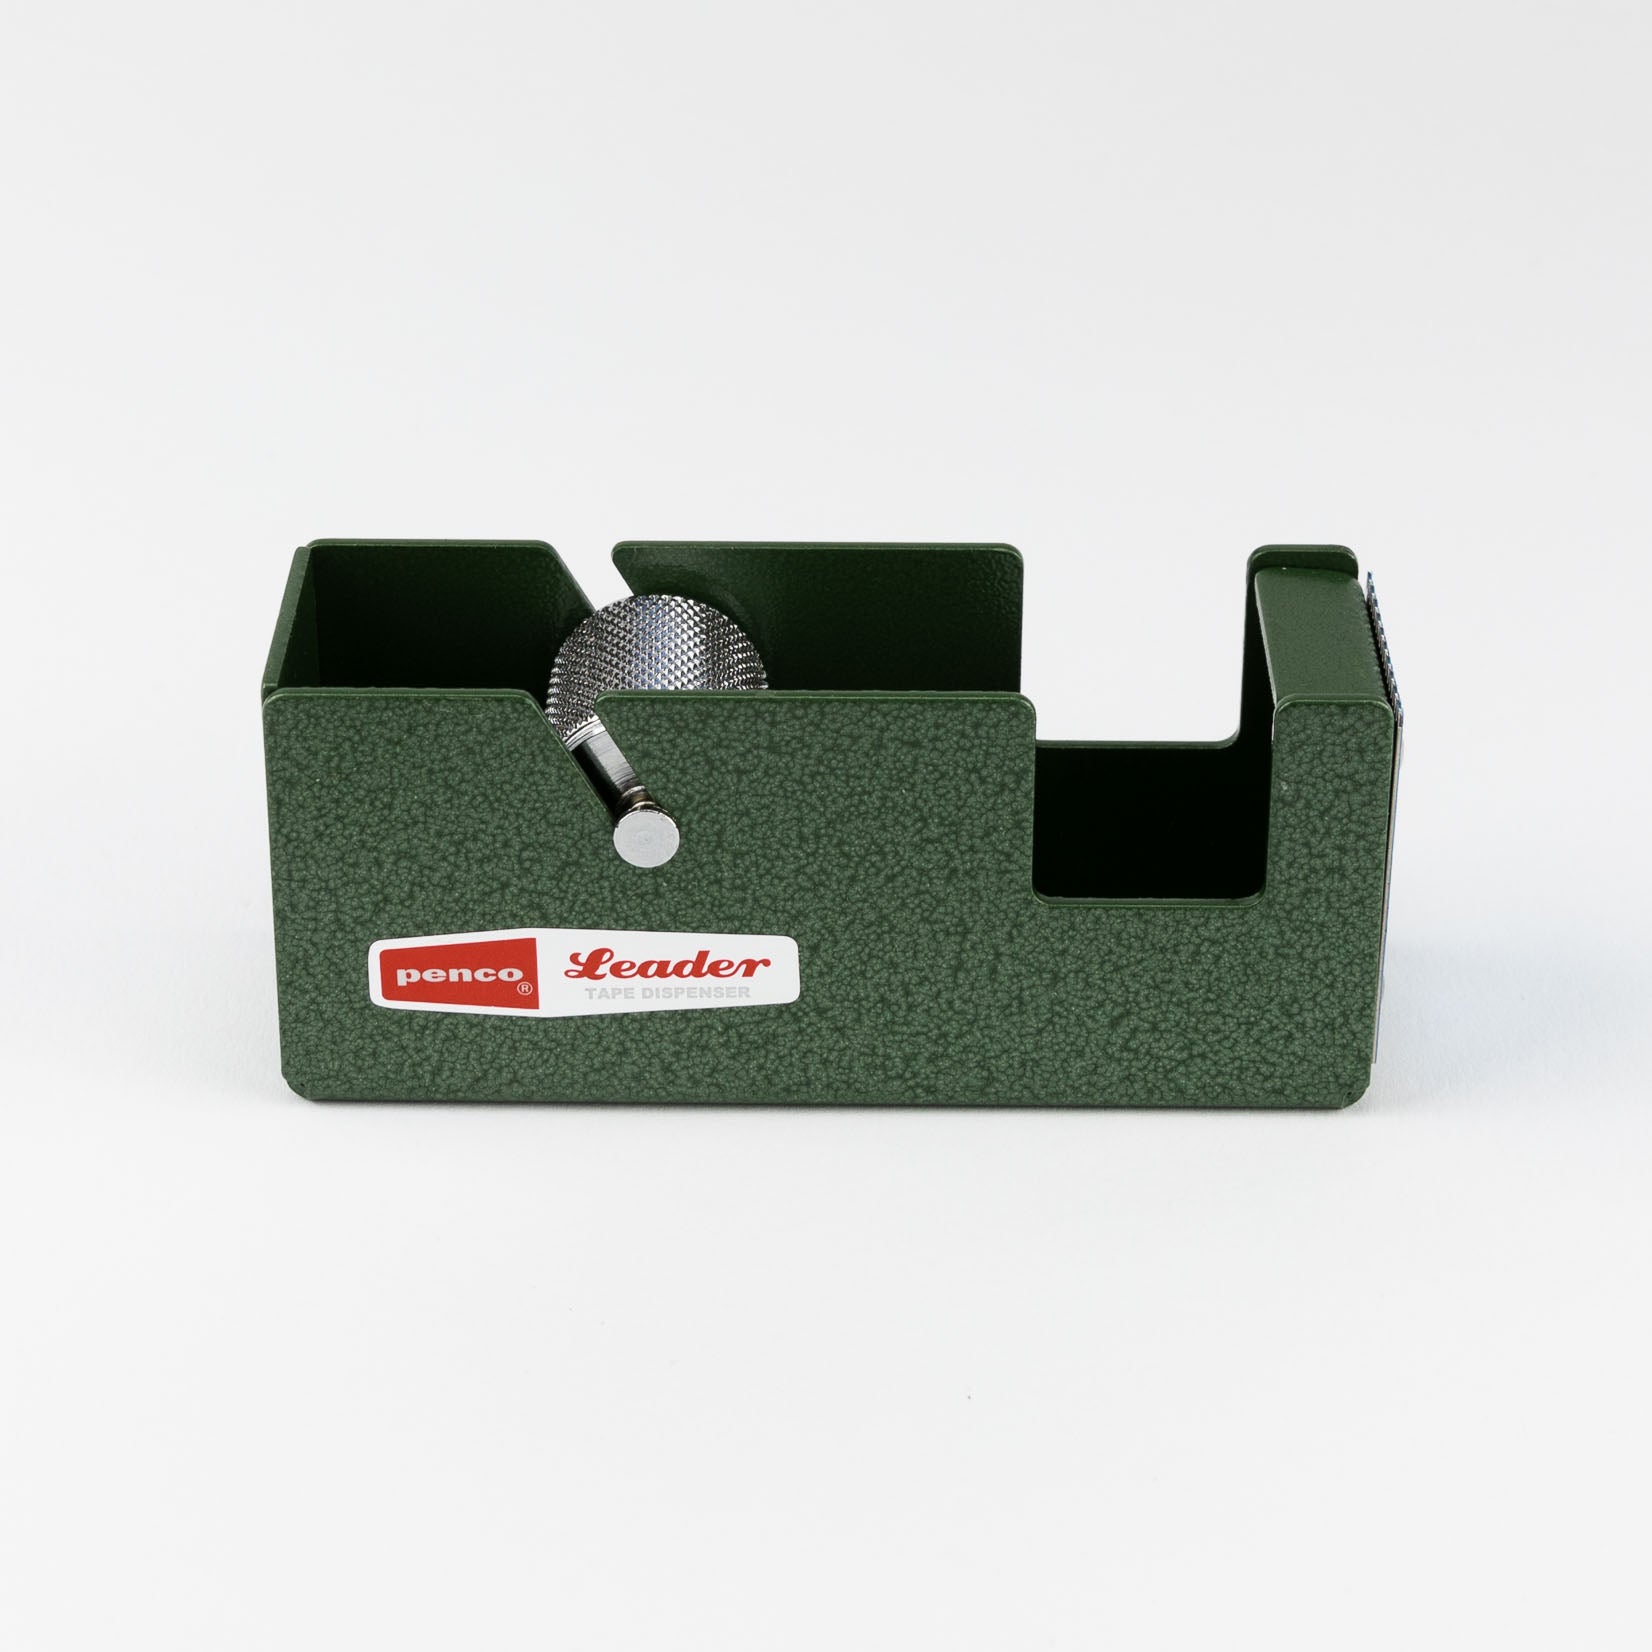 Penco Japan Klebebandabroller Tape Dispenser grün